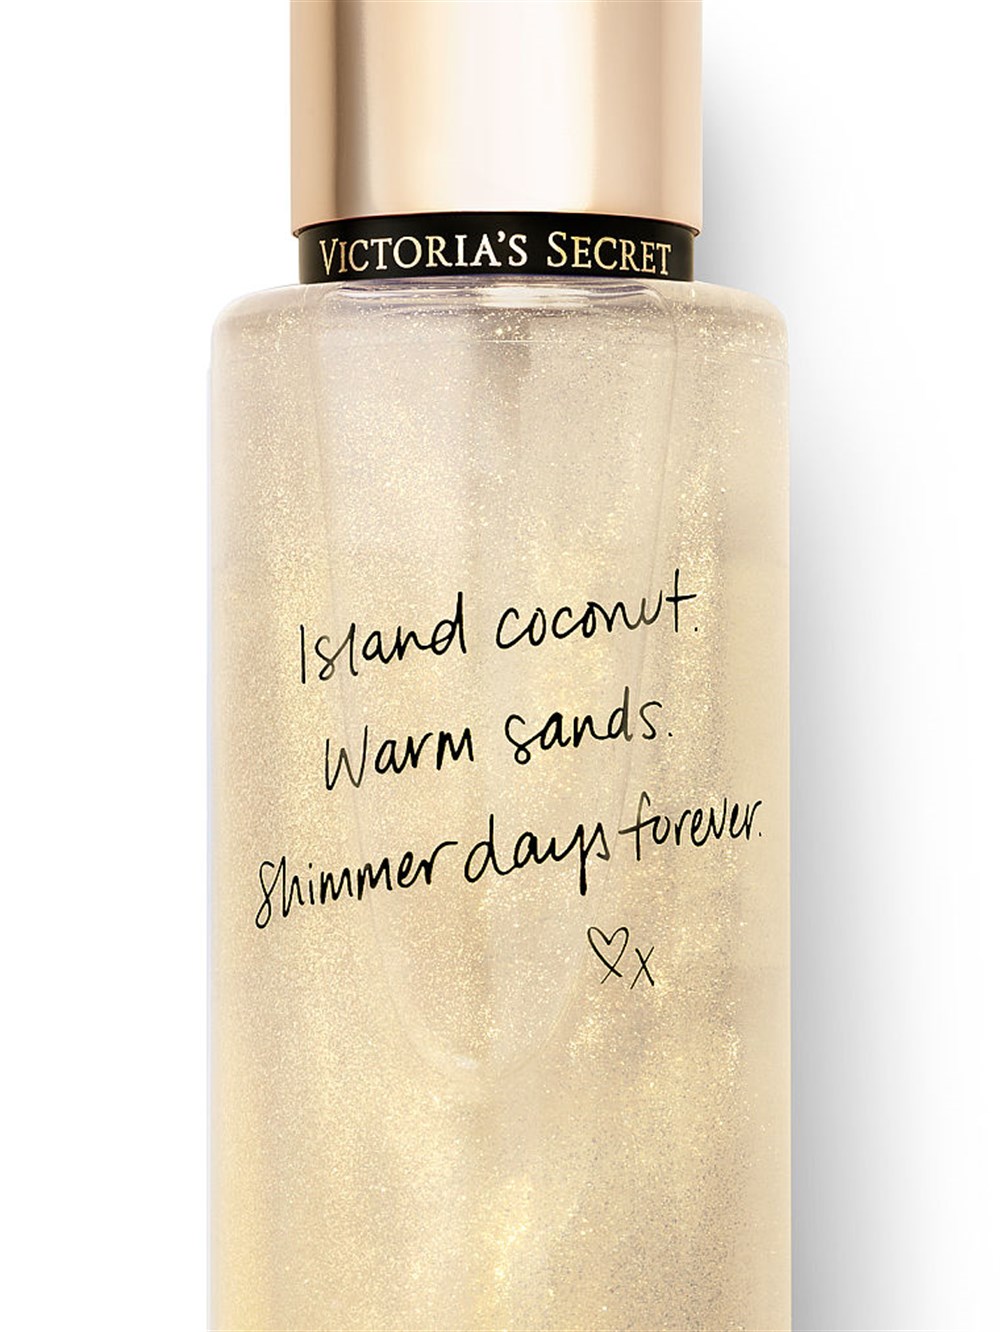 Victoria's Secret Shimmer Body Mist Scent